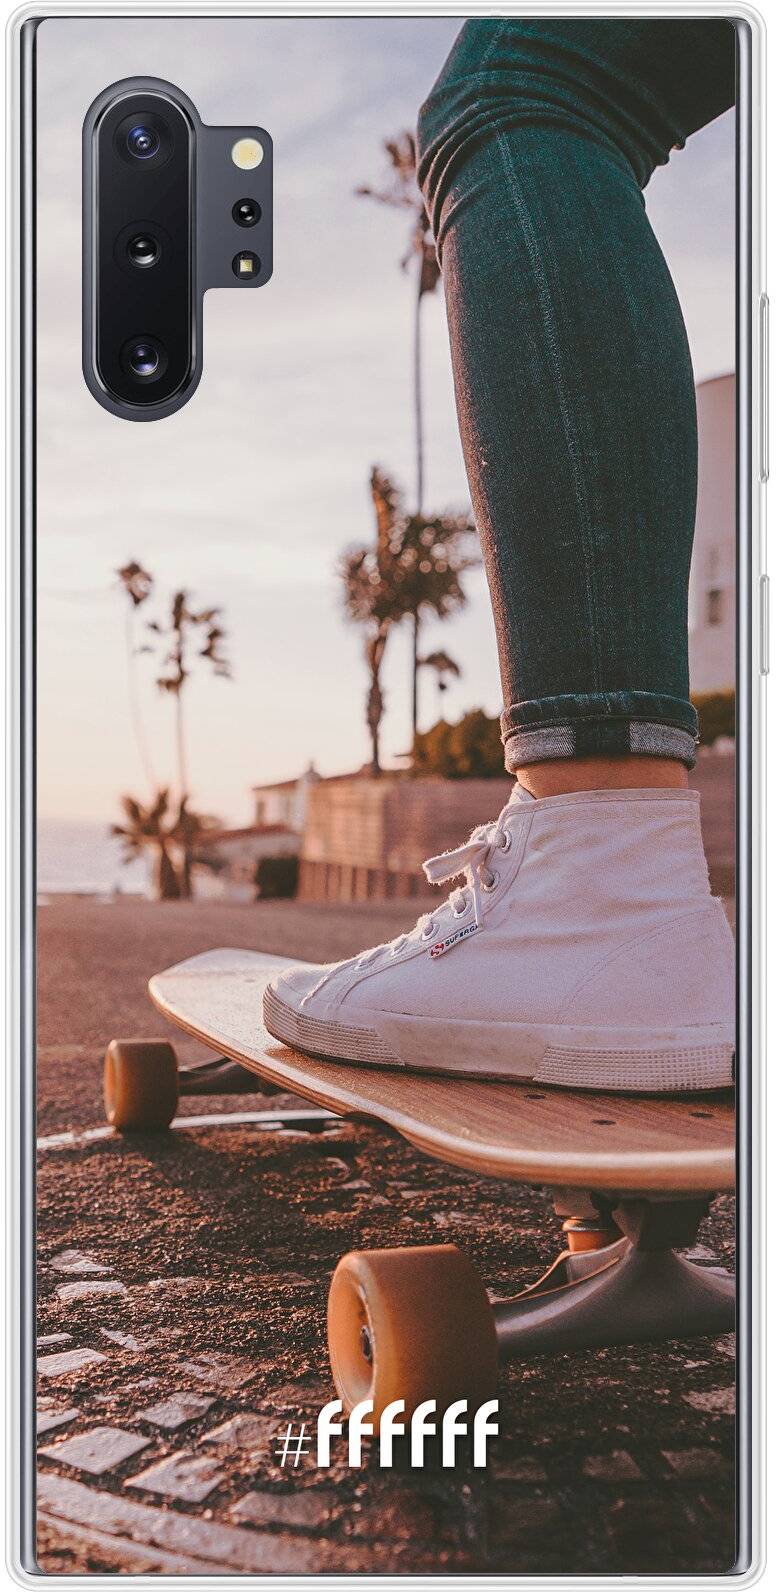 Skateboarding Galaxy Note 10 Plus